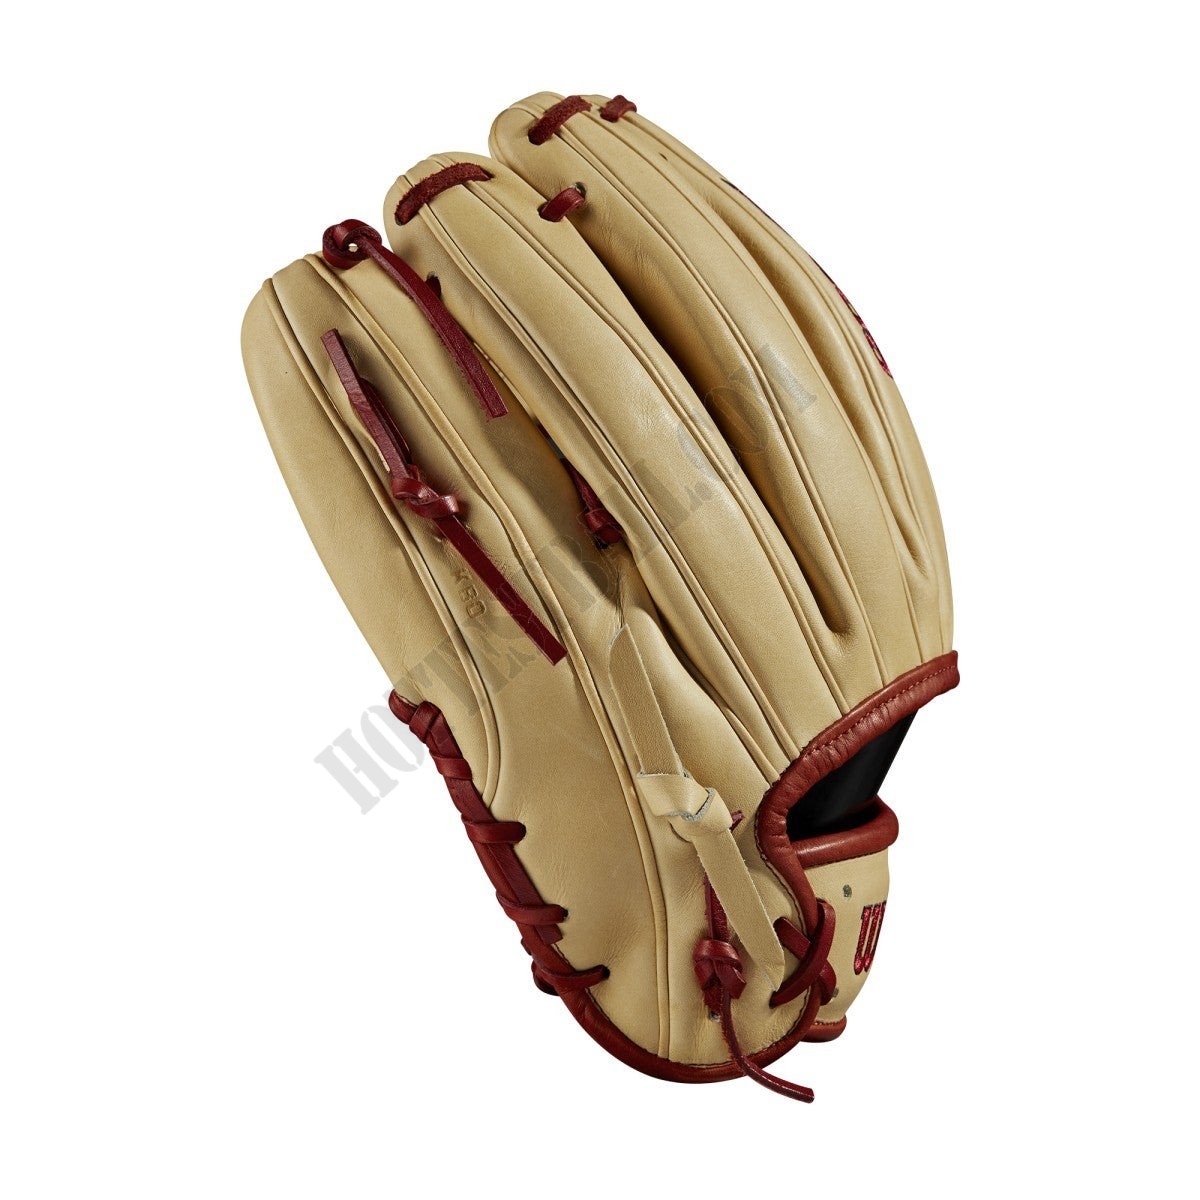 2021 A2000 1787 11.75" Infield Baseball Glove ● Wilson Promotions - -4